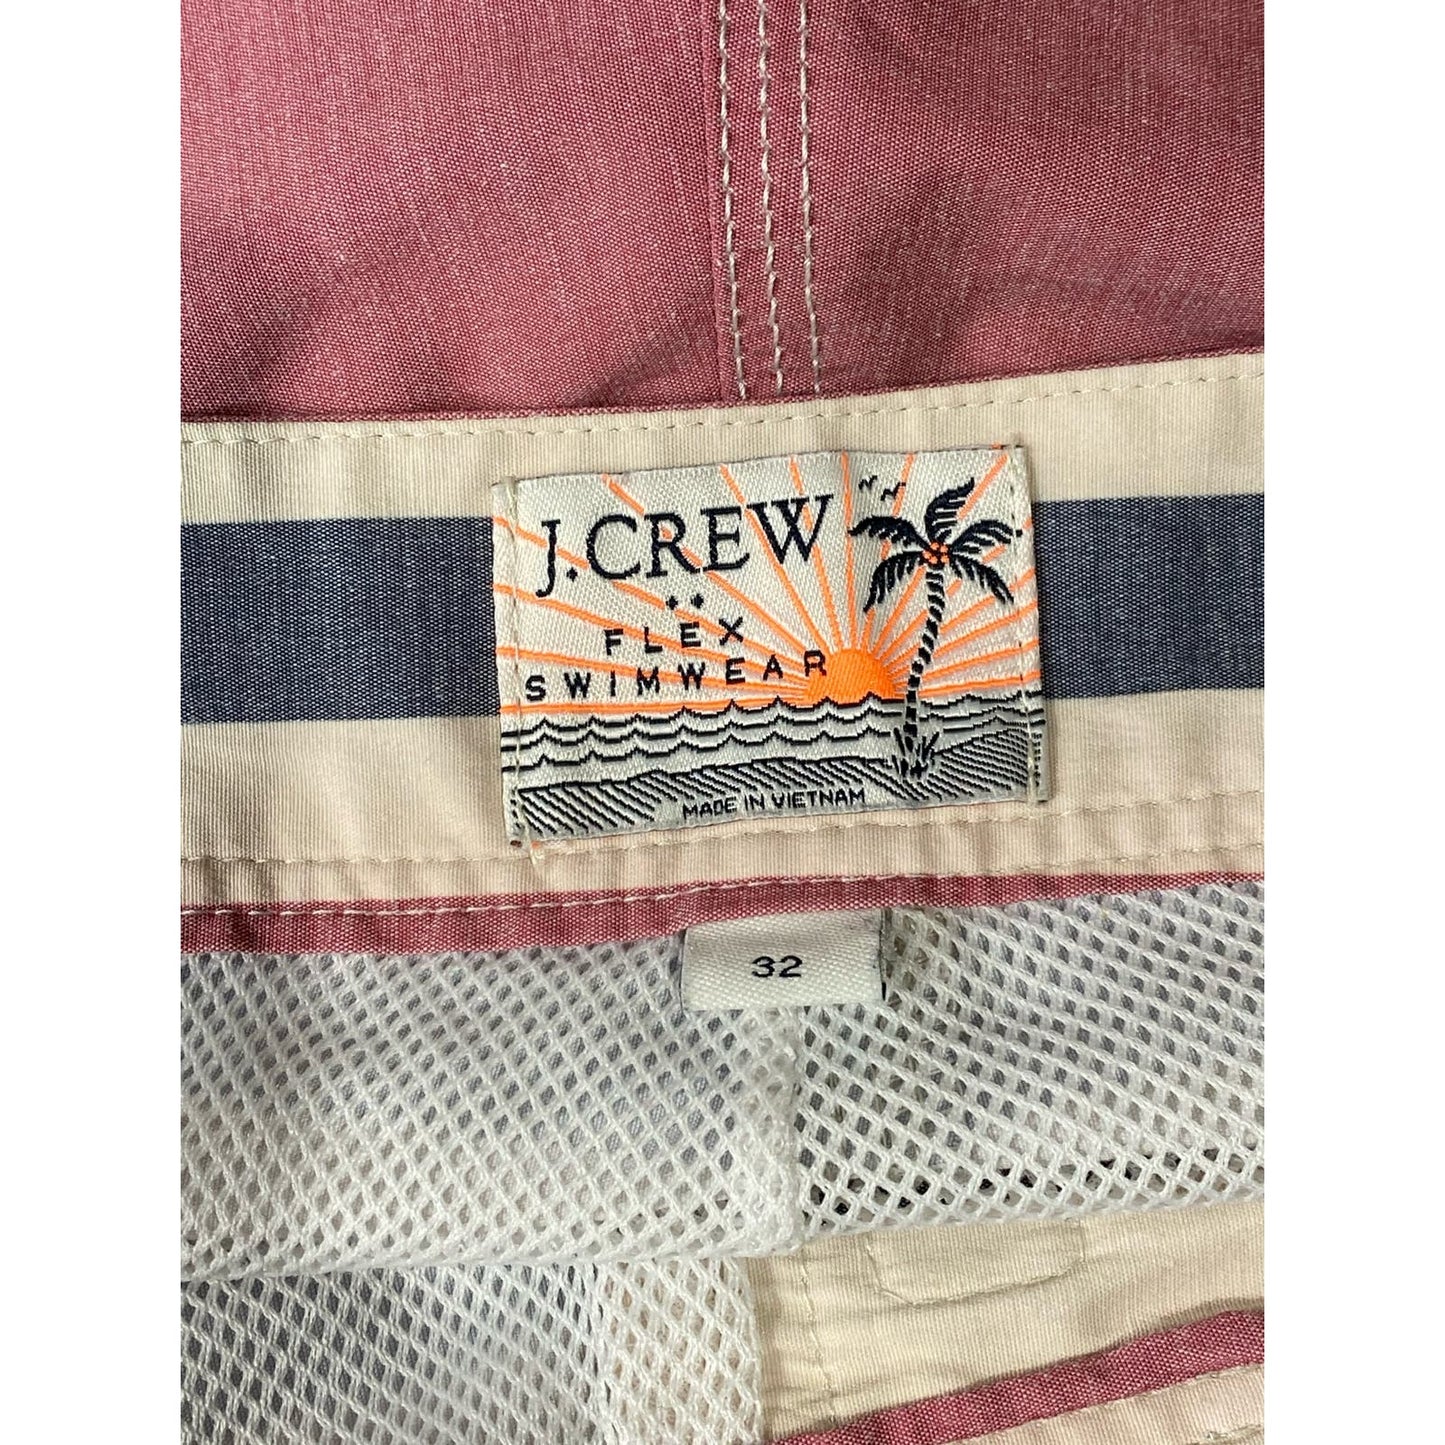 J.CREW Men's Pink/Cream/Navy Flex Drawstring Pull-On Swim Trunks SZ 32